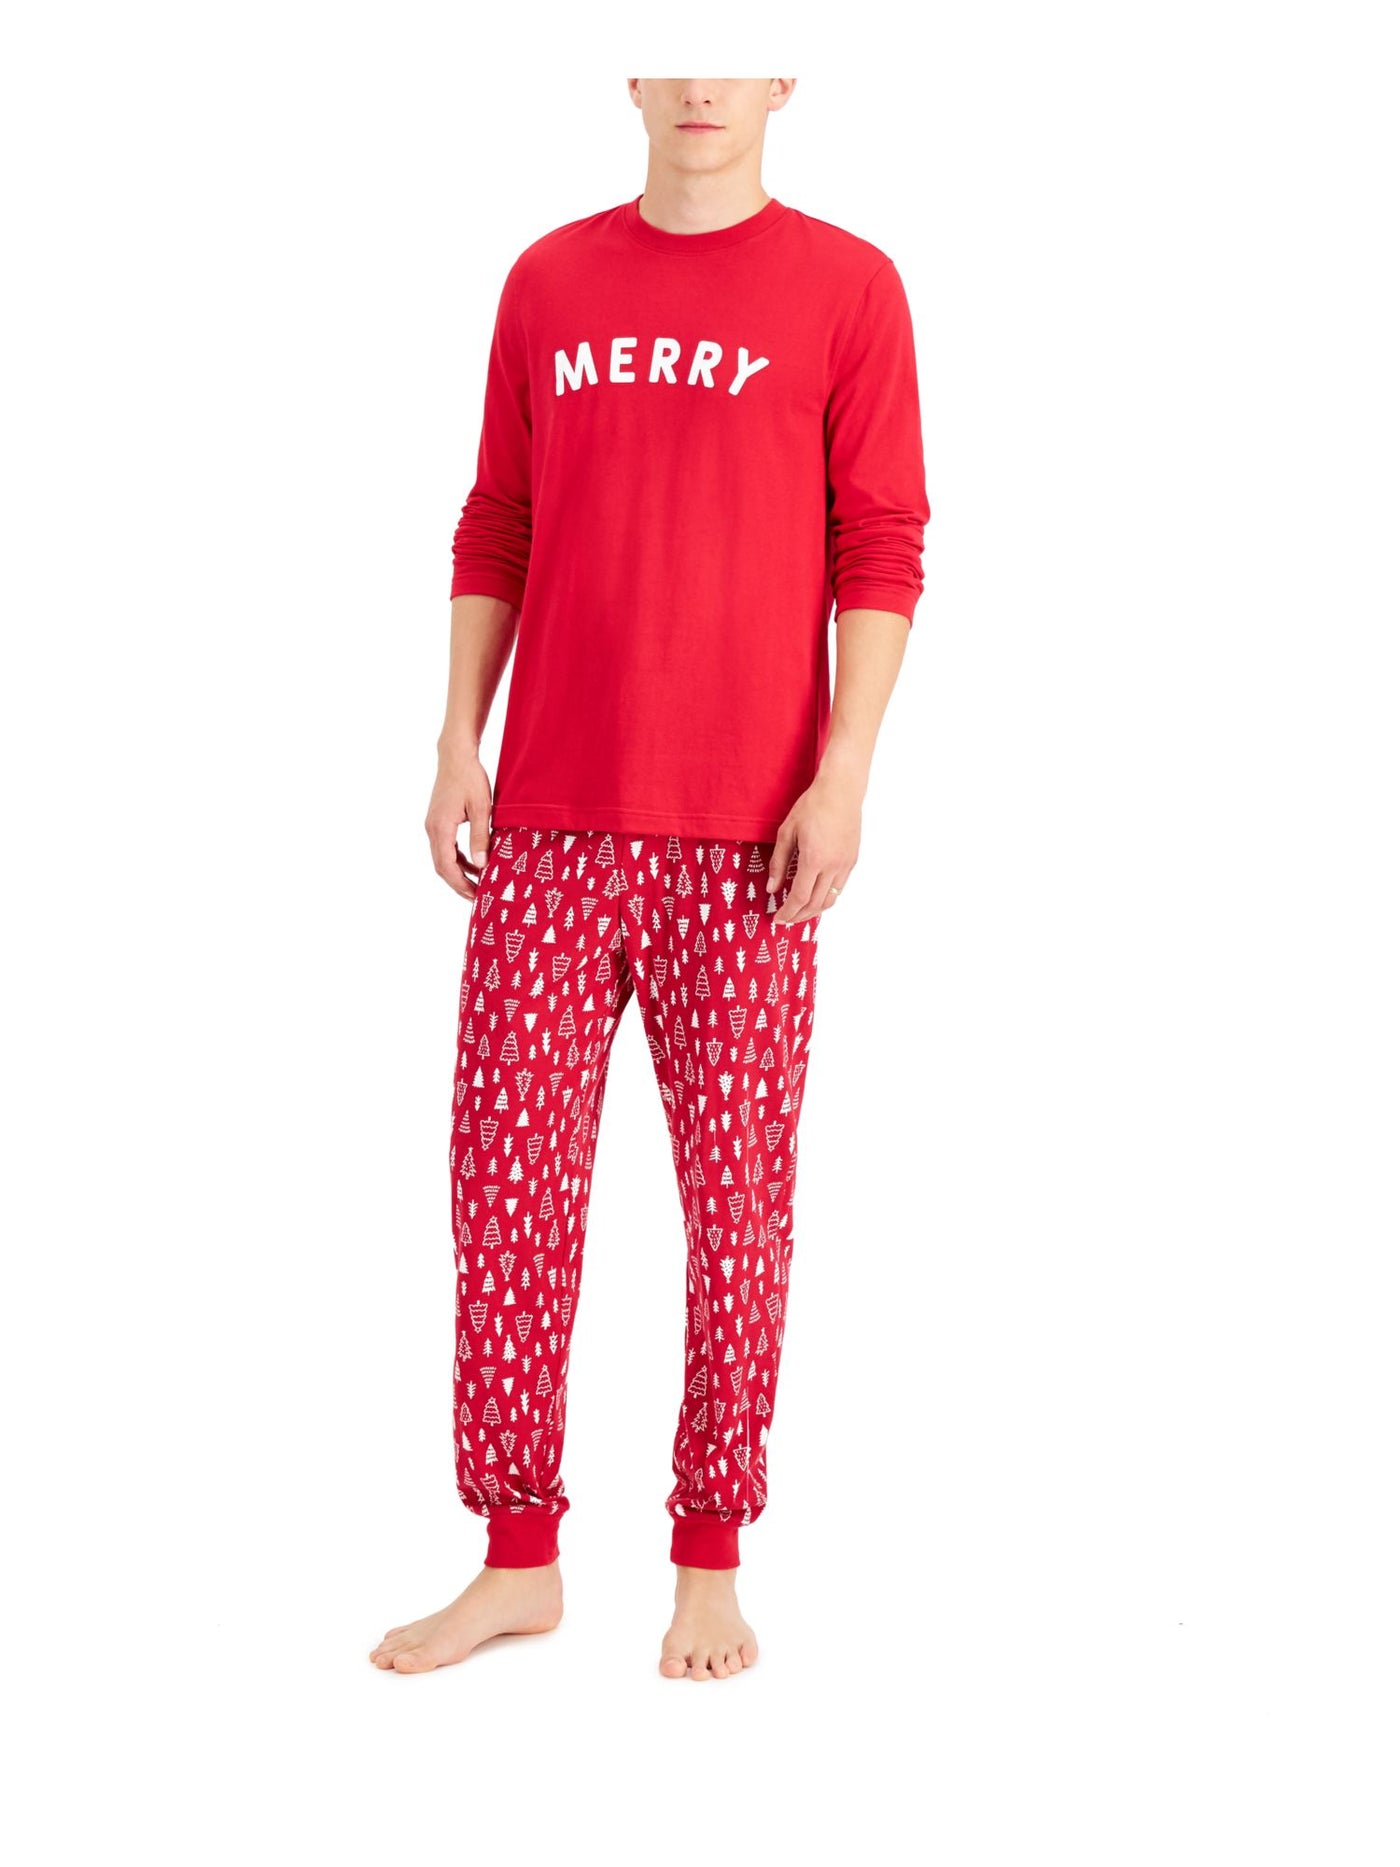 FAMILY PJs Mens Merry Red Printed Elastic Band Long Sleeve T-Shirt Top Cuffed Pants Pajamas S